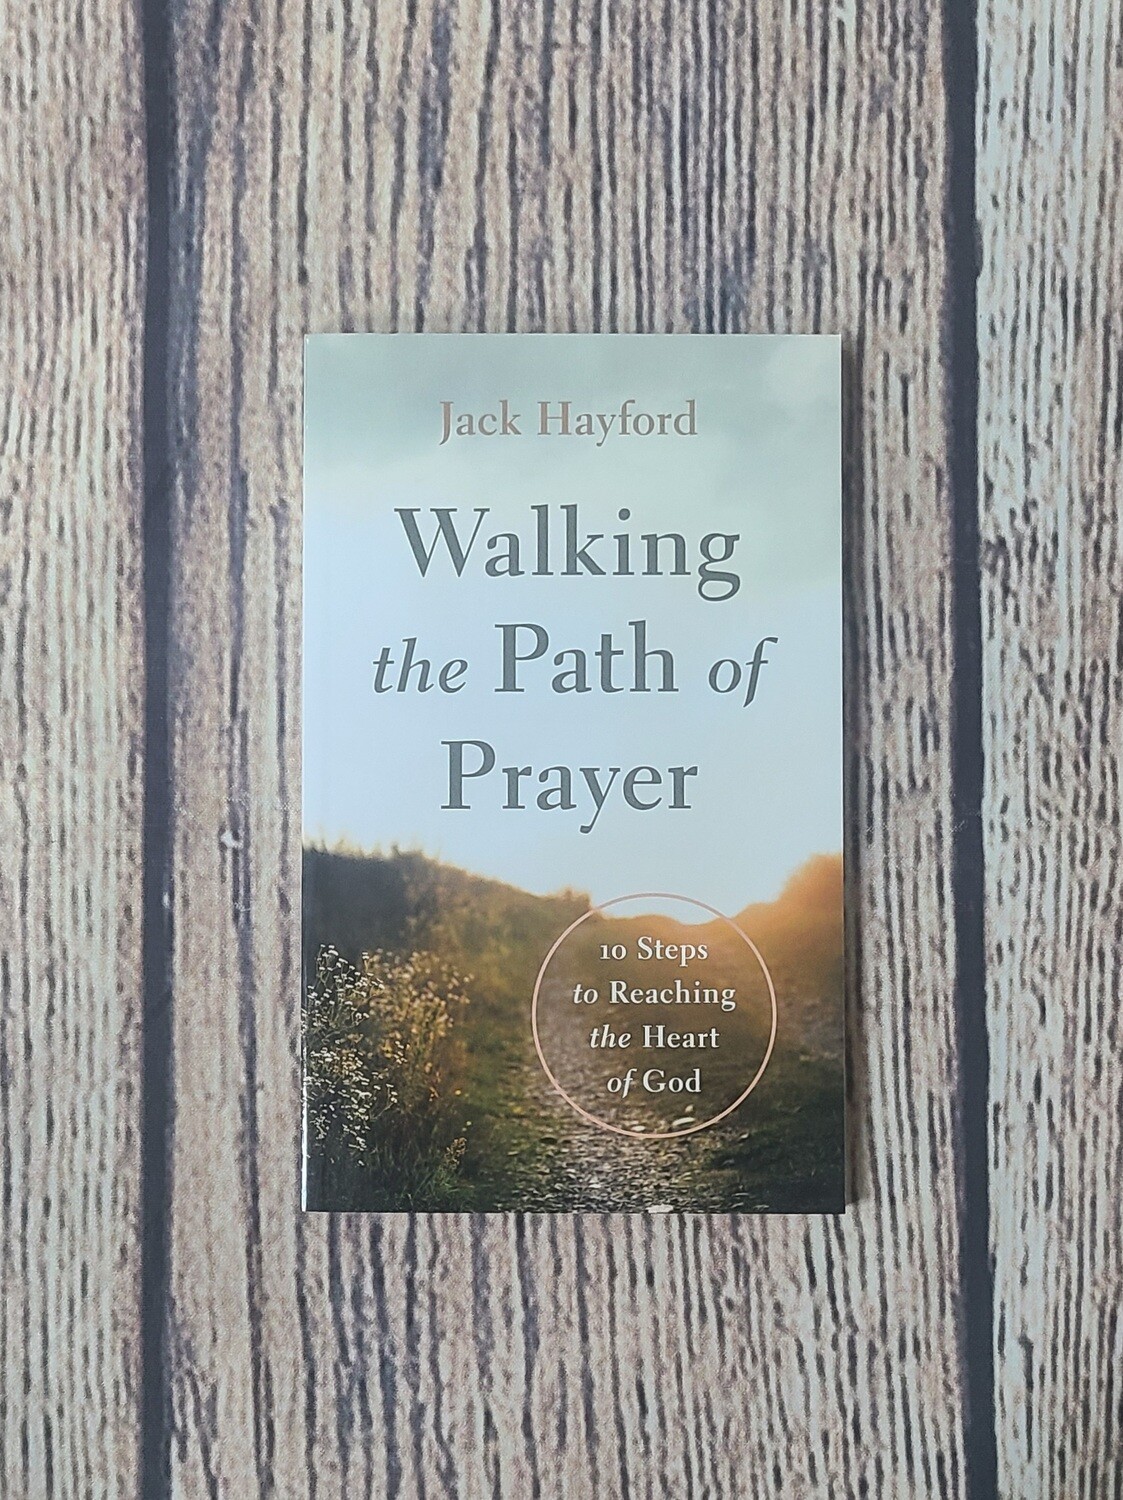 Walking the Path of Prayer by Jack Hayford